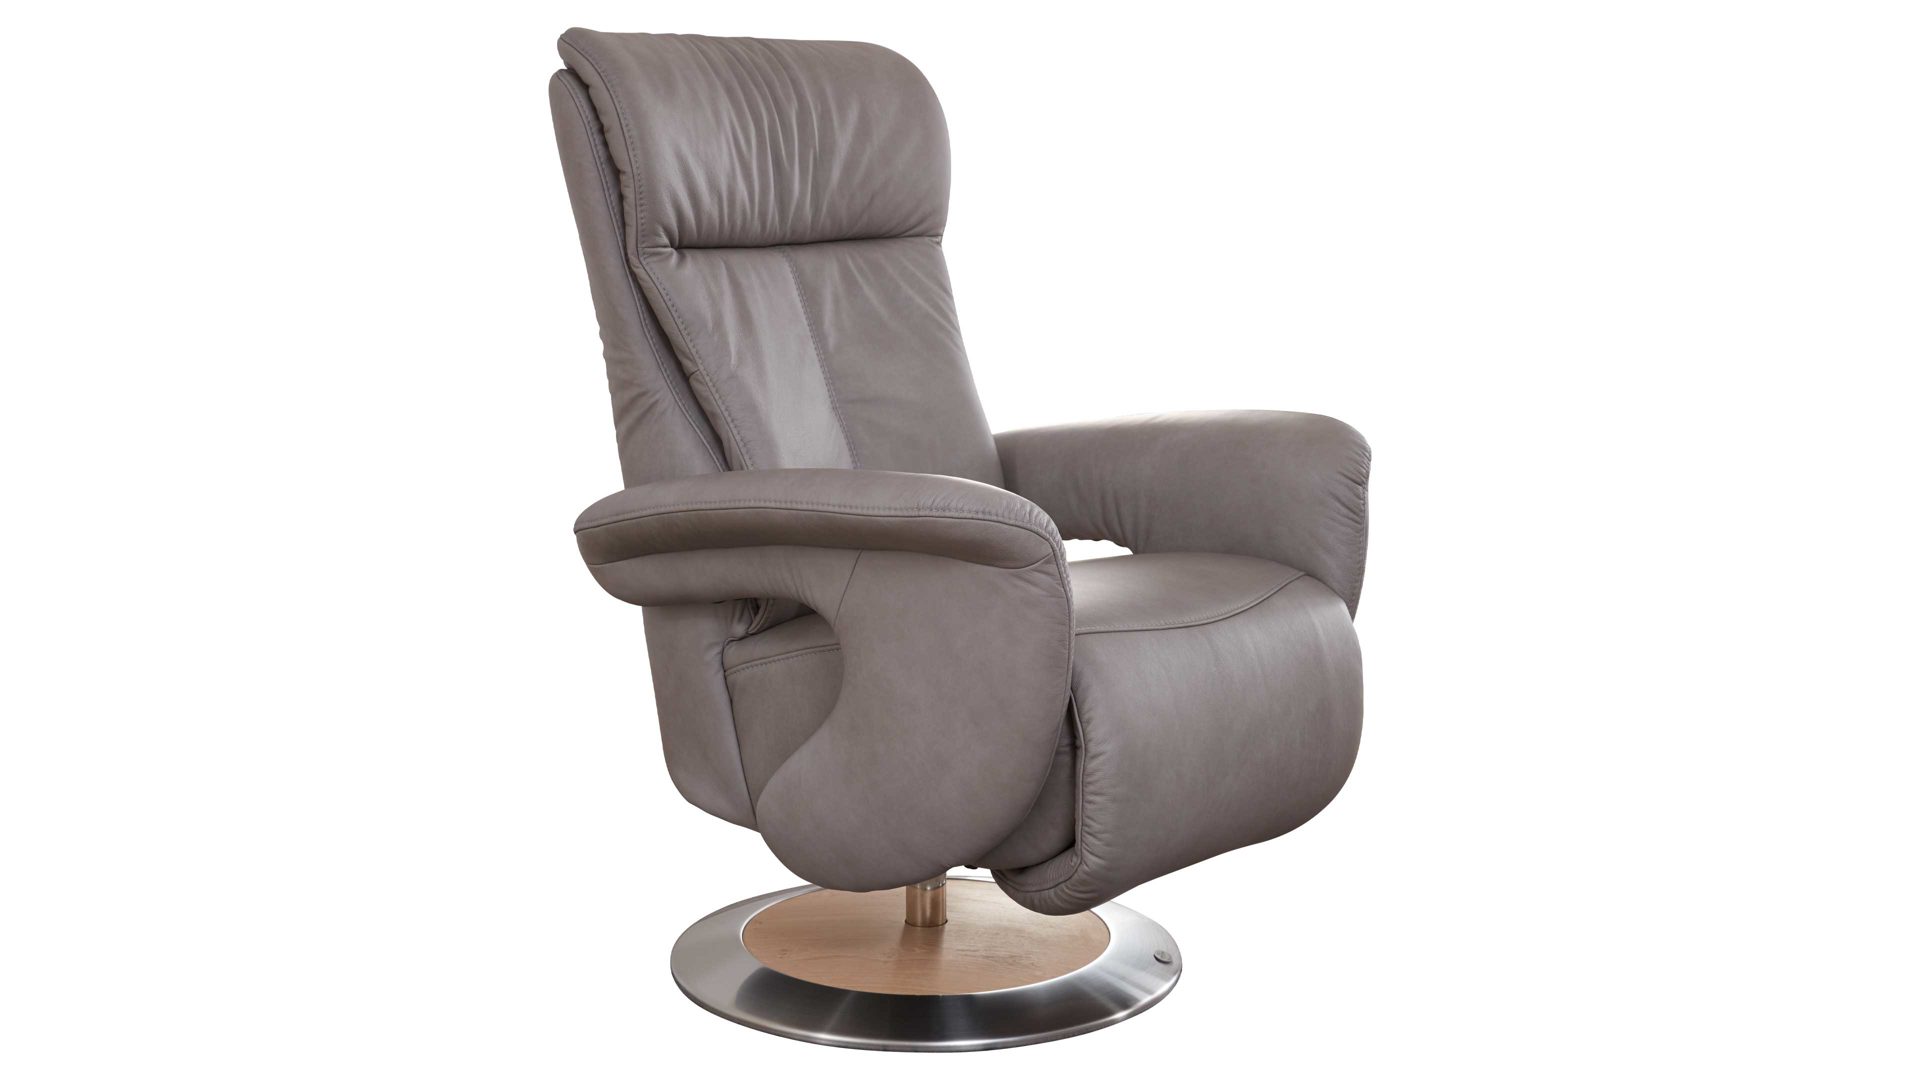 Relaxsessel comfortmaster besser sitzen, liegen, leben aus Leder in Grau Comfortmaster 7333 Easy-Swing-Sessel 35D als Sitzmöbel canyonfarbenes LongLife-Leder LG 18 & Wildeiche-Tellerfuß